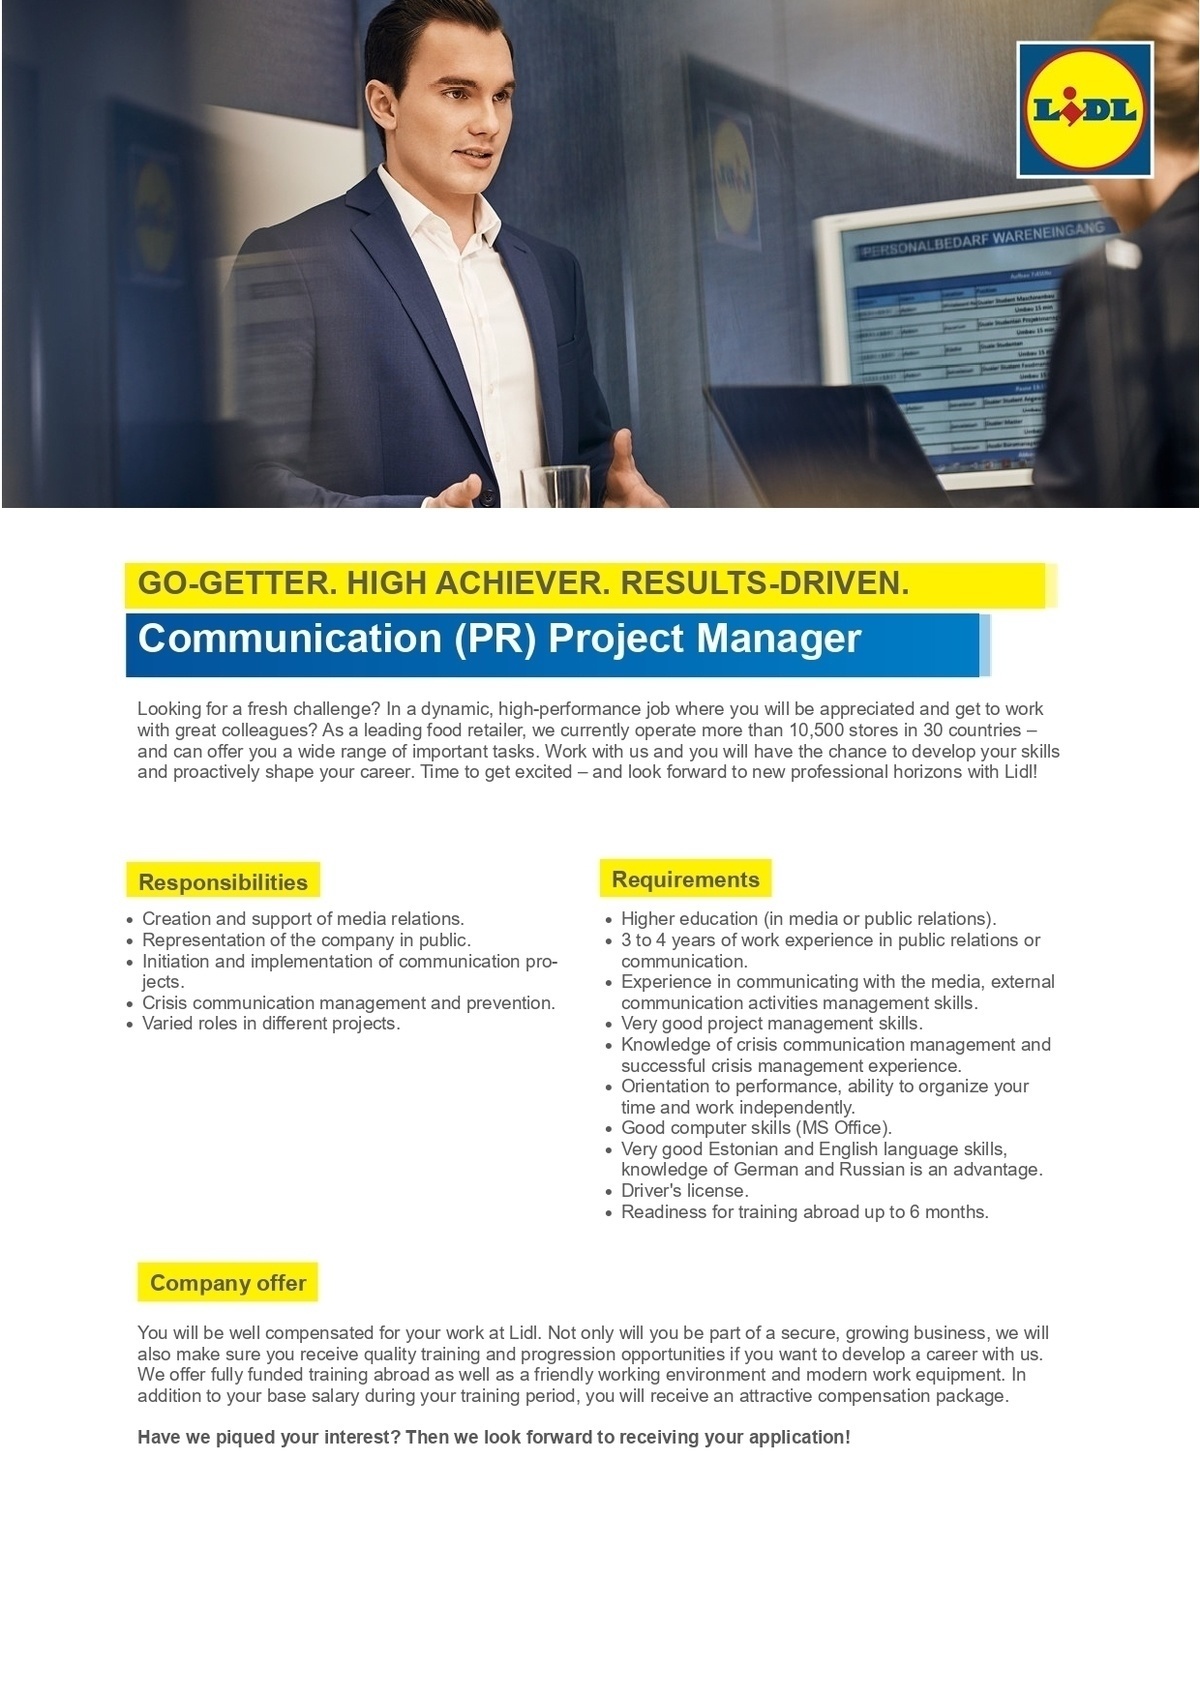 Lidl Eesti OÜ Communication (PR) Project Manager